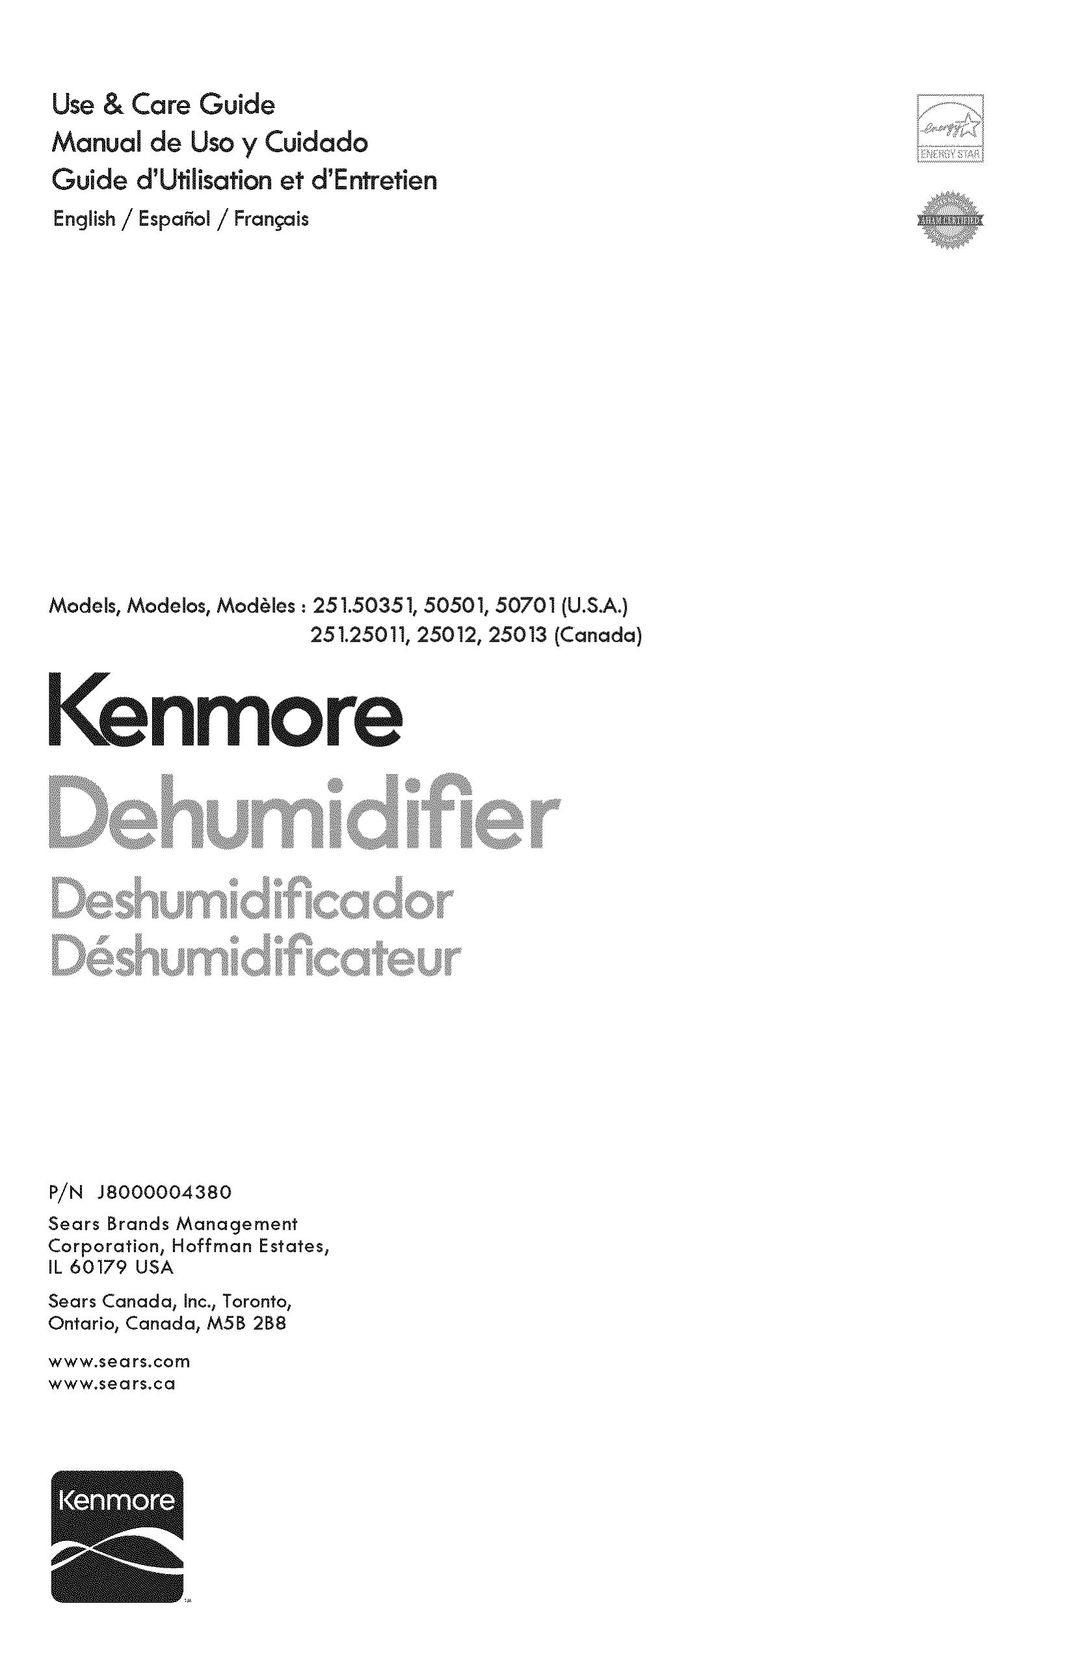 Kenmore 251.50701 Dehumidifier User Manual